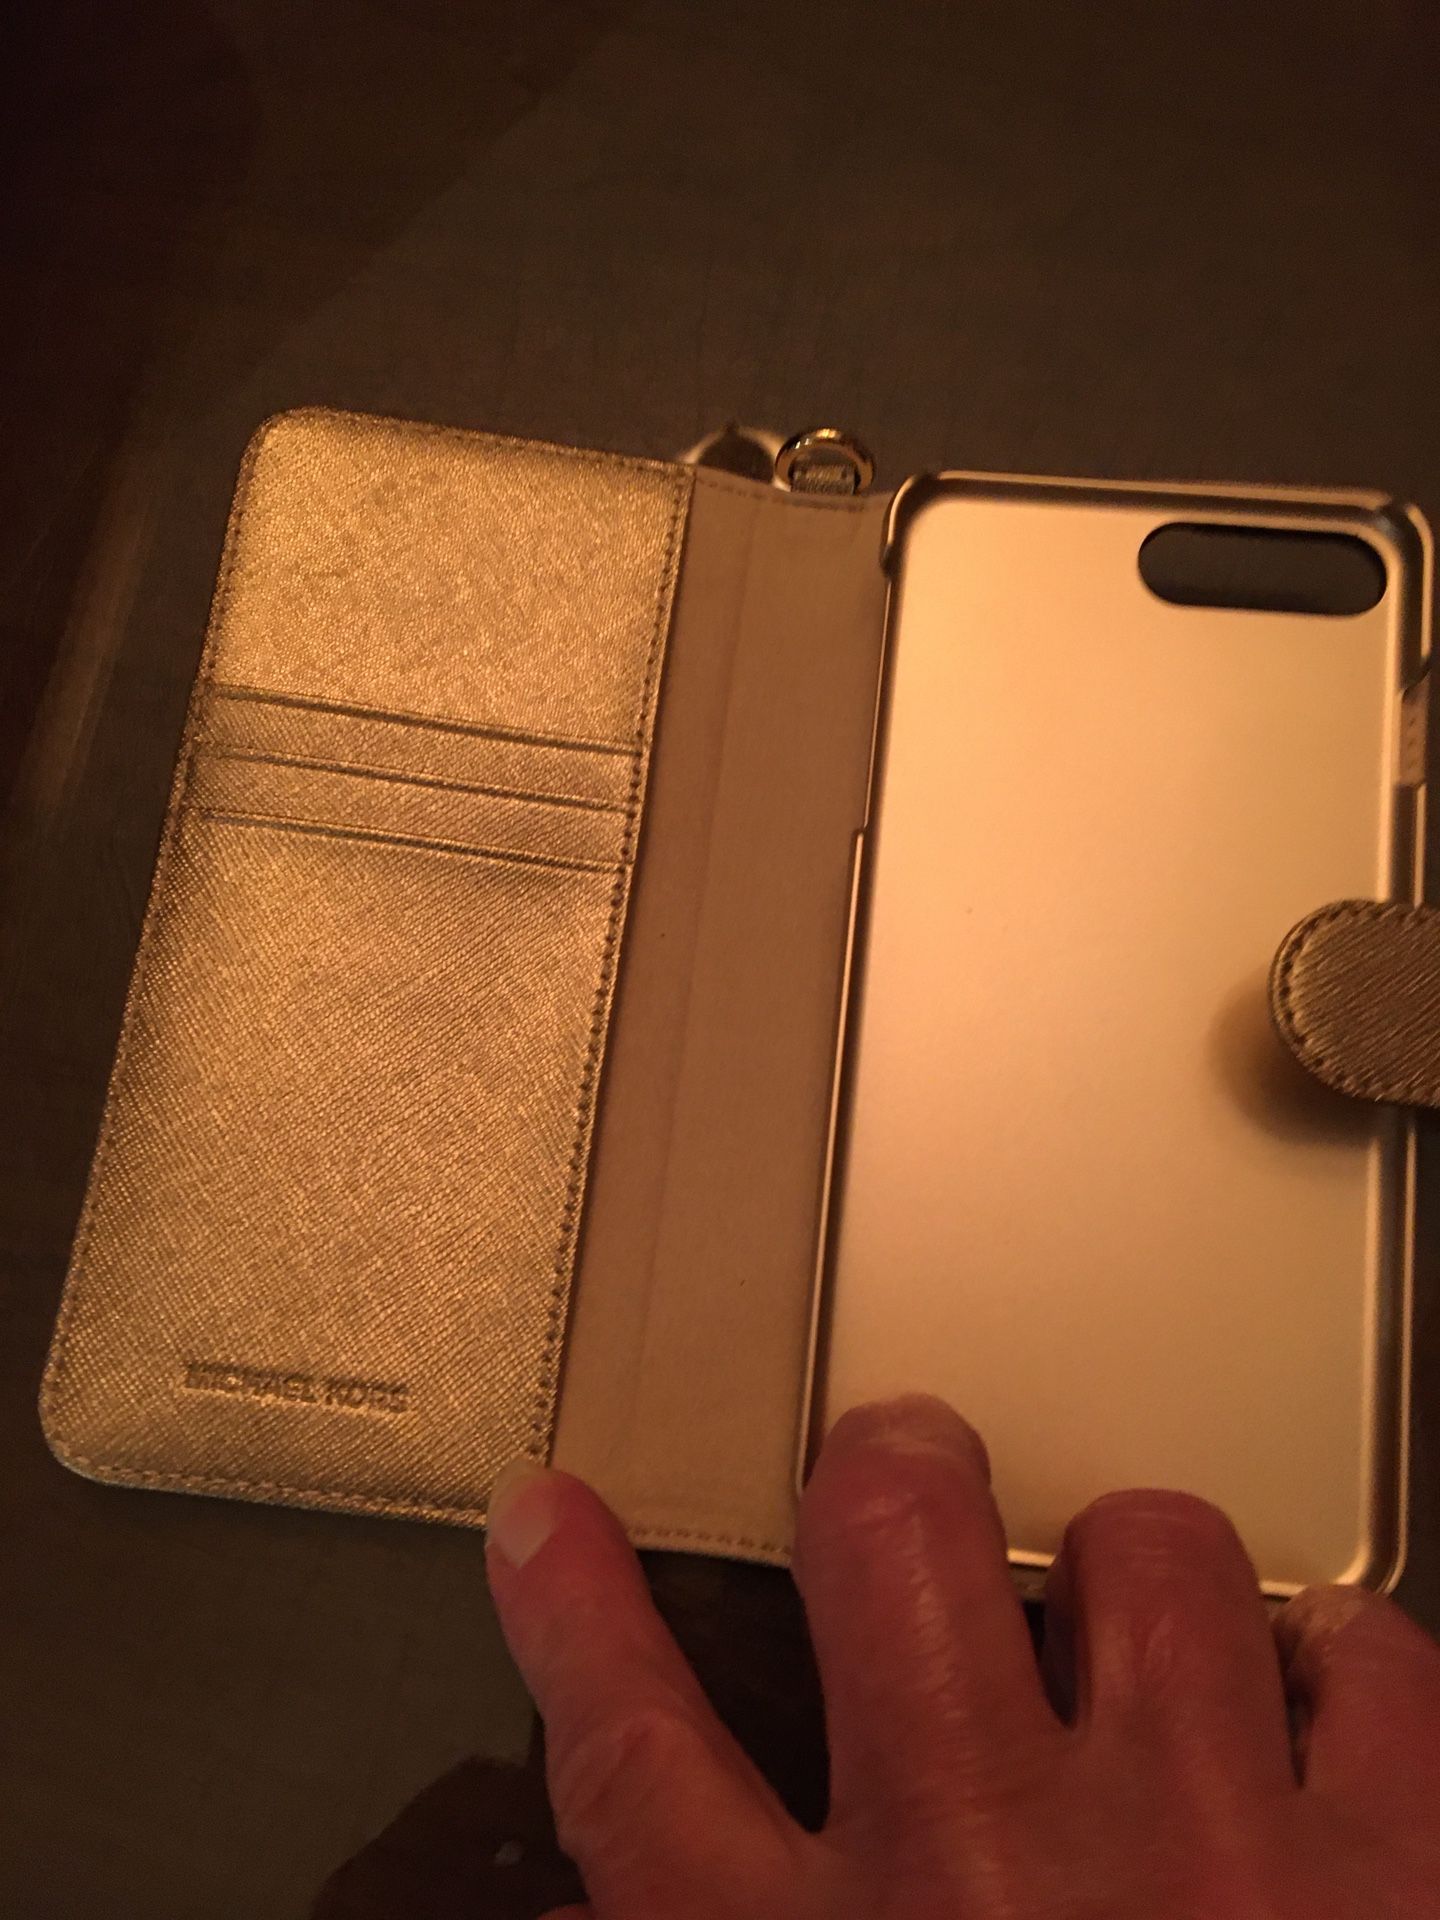 Michael Kors new case for 7&8 plus iPhones